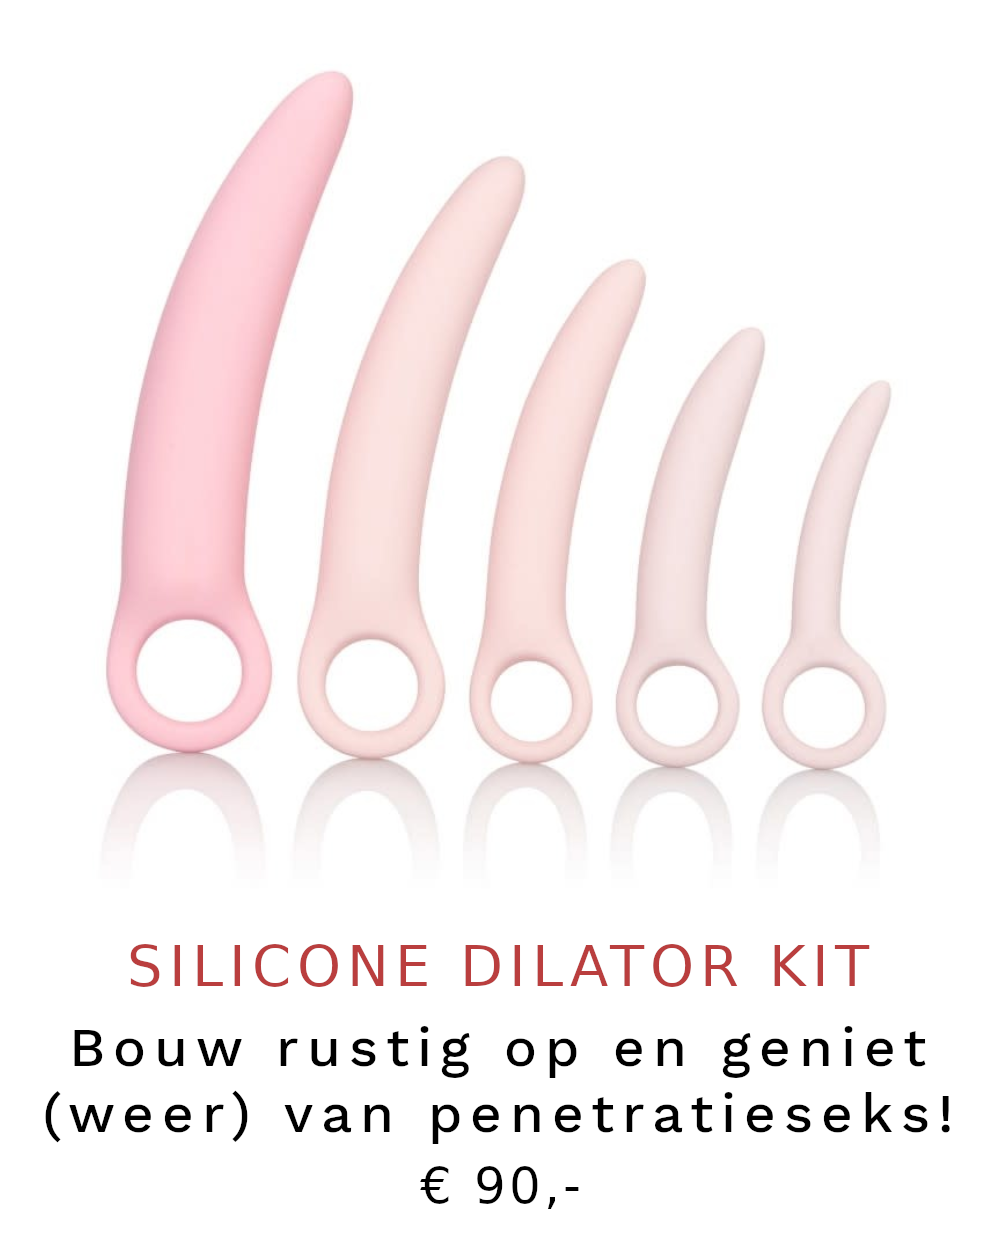 Silicone dilator kit